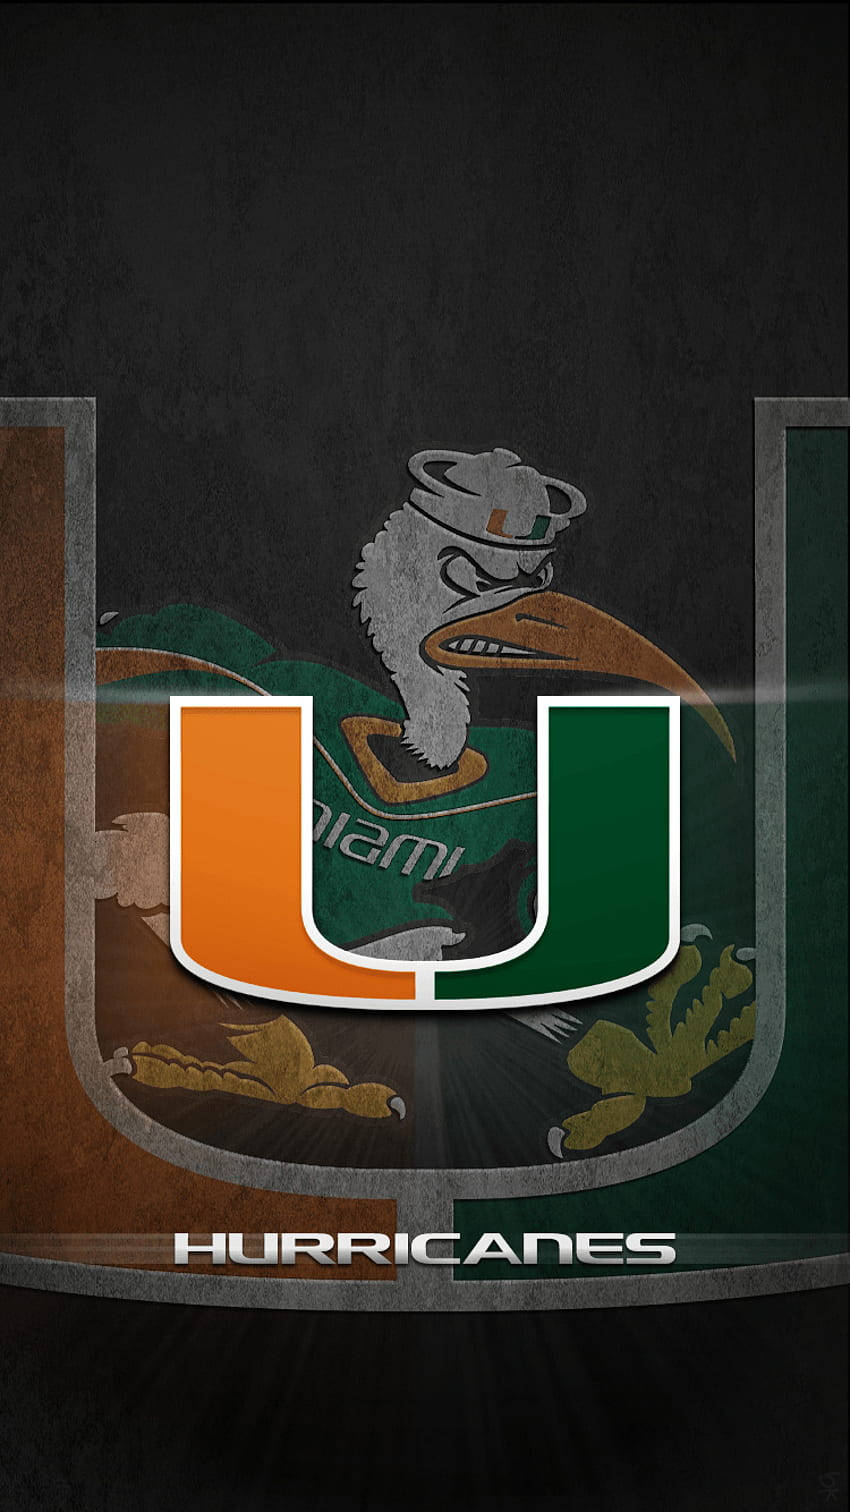 Universitätvon Miami-logo Und Sebastian Wallpaper